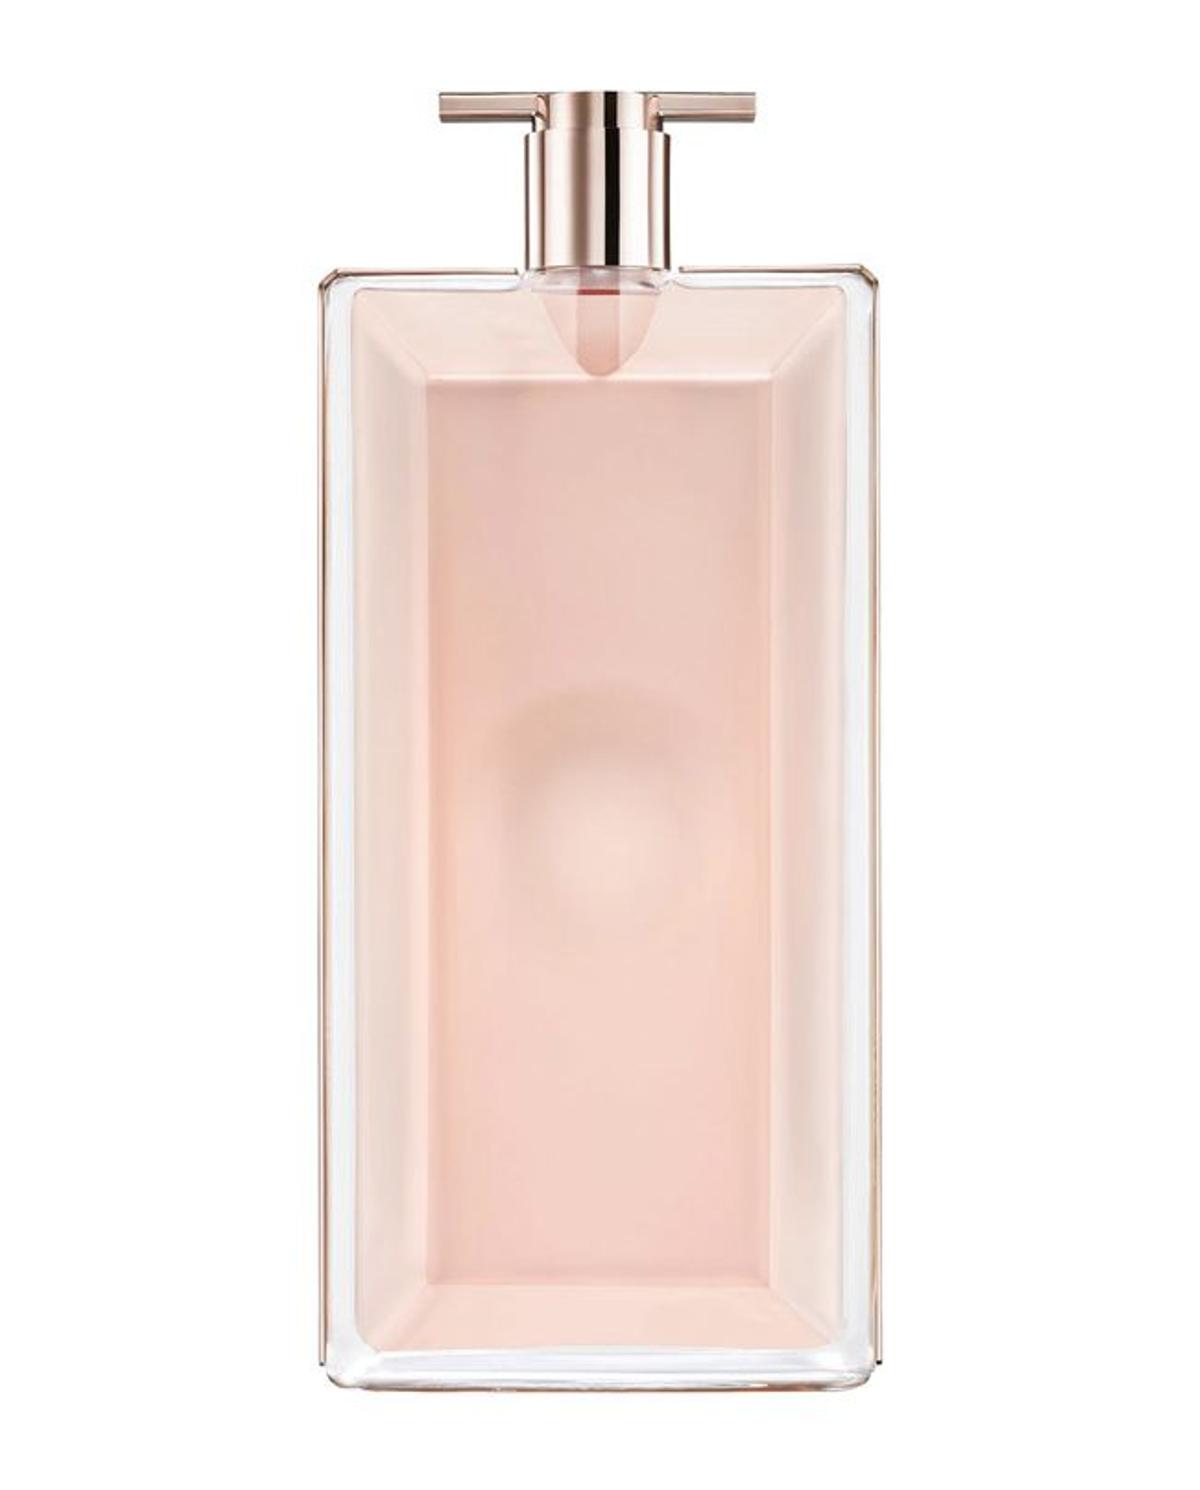 El perfume Idôle de Lancôme